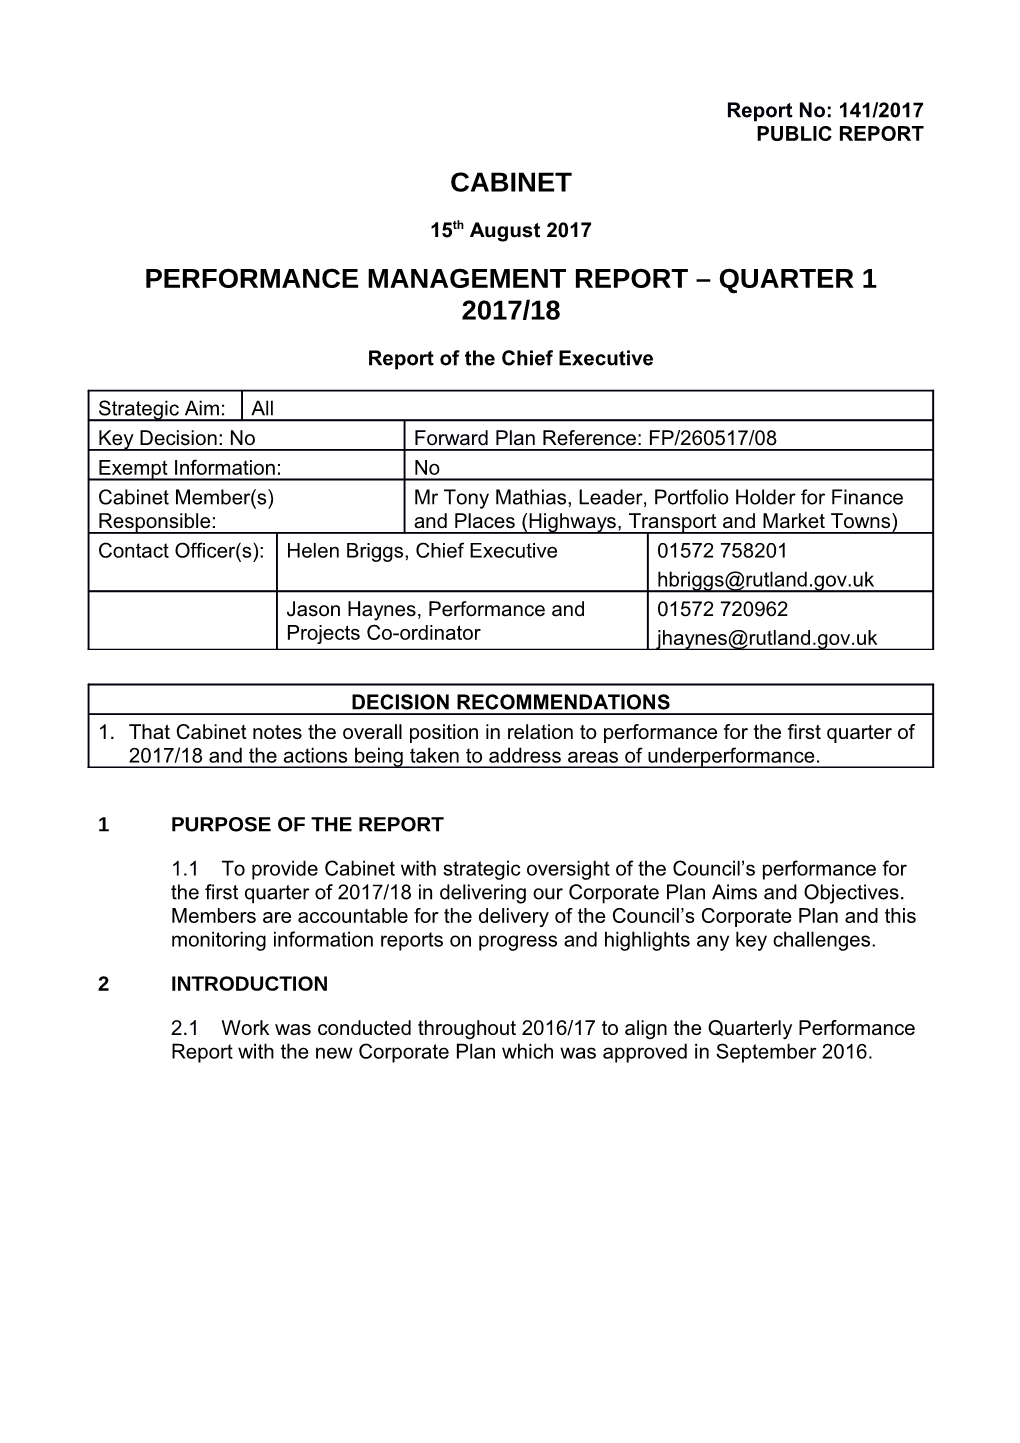 Performance Management Report Quarter 1 2017/18